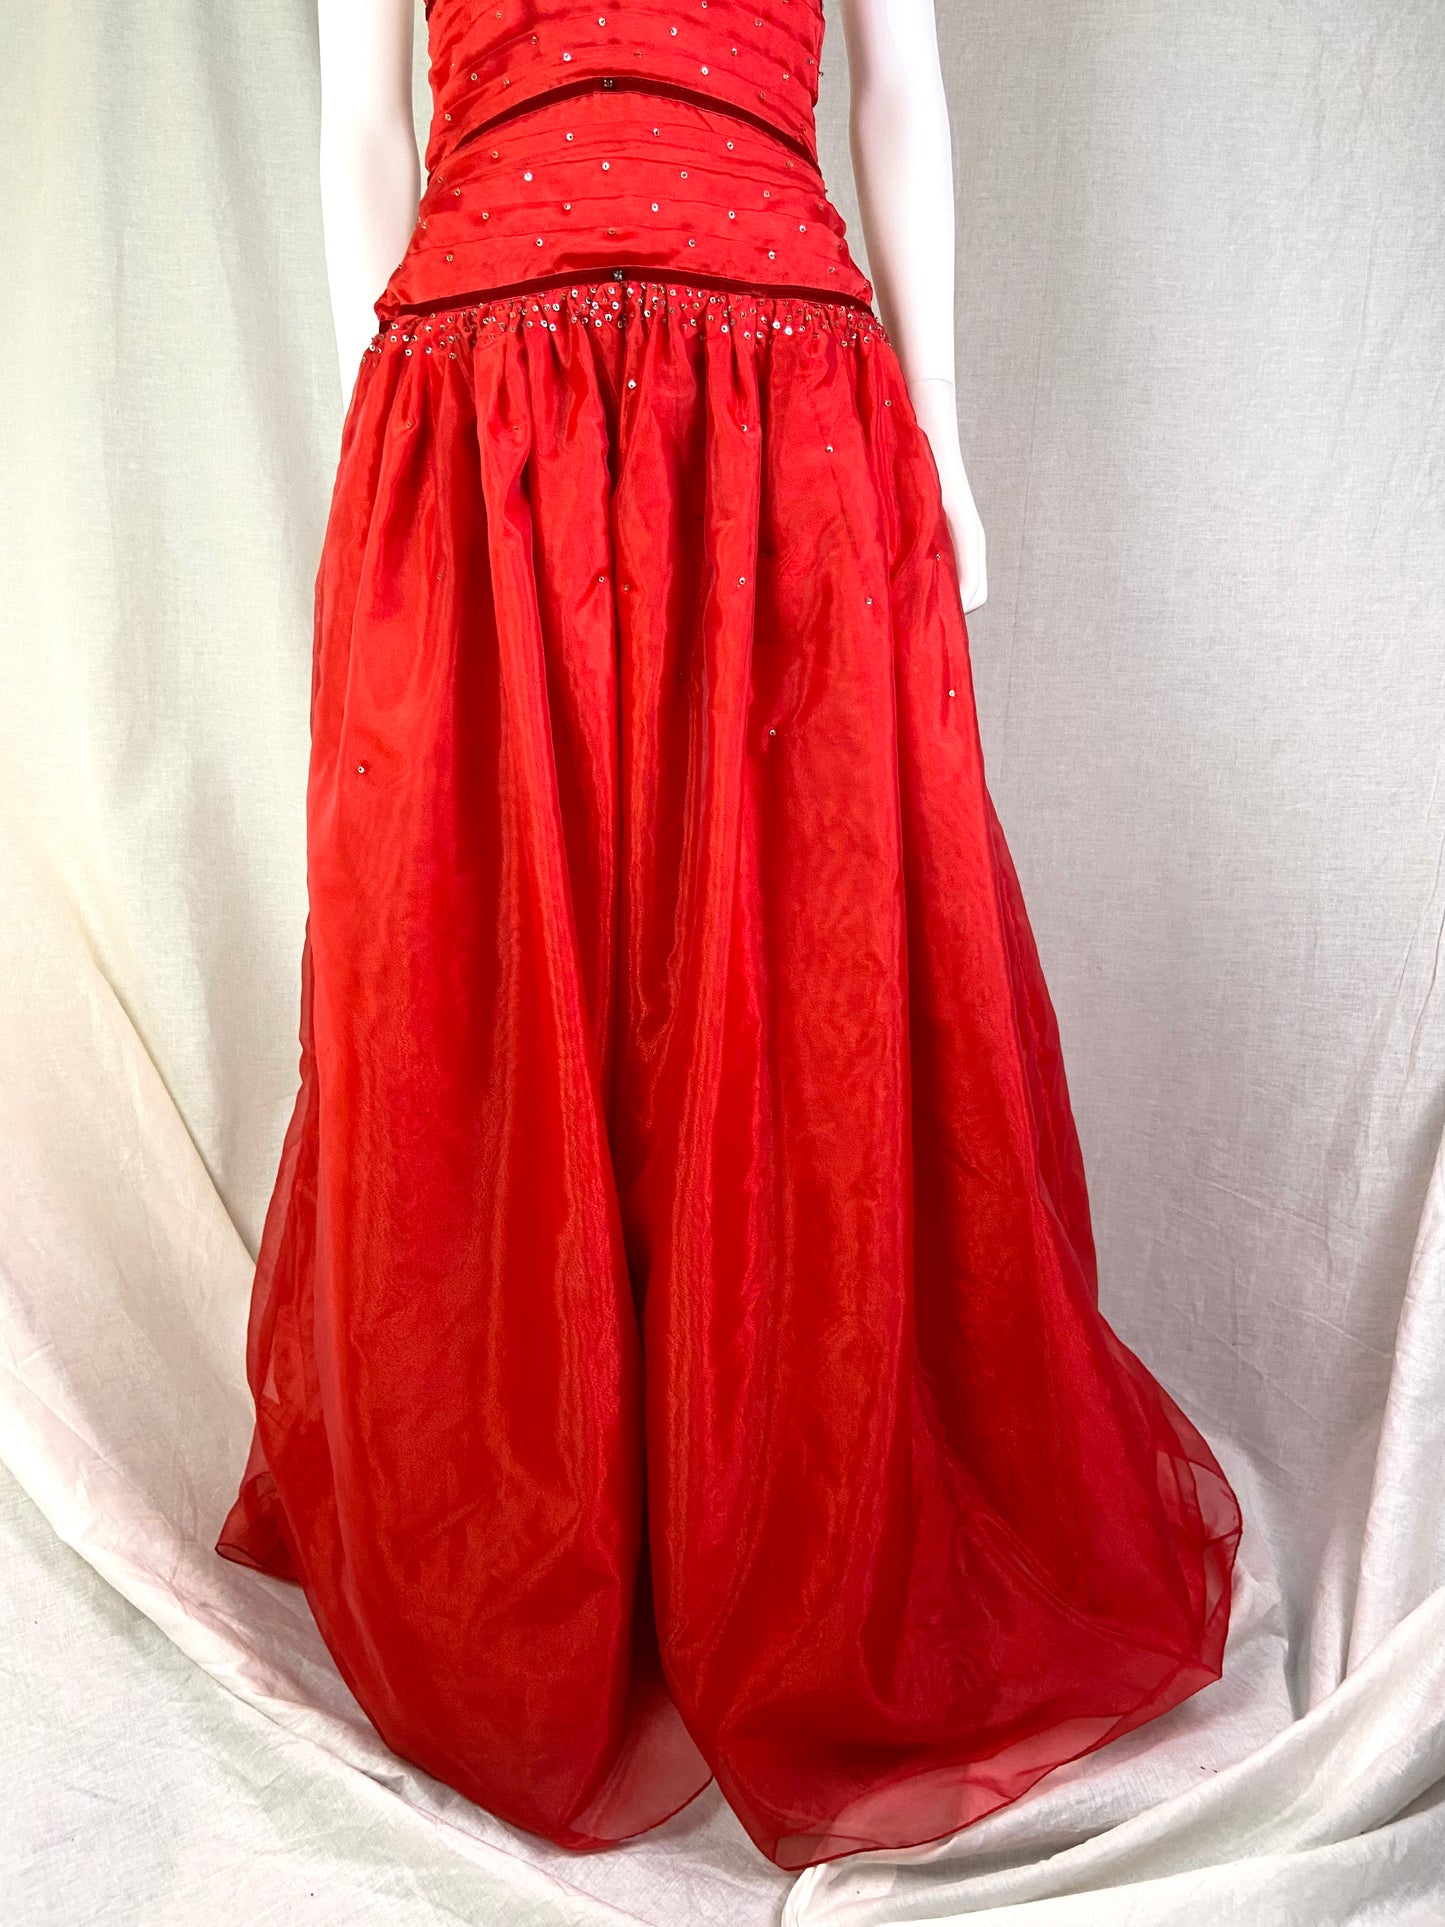 Beutifly Red Satin Rhinestone Ruche Gown